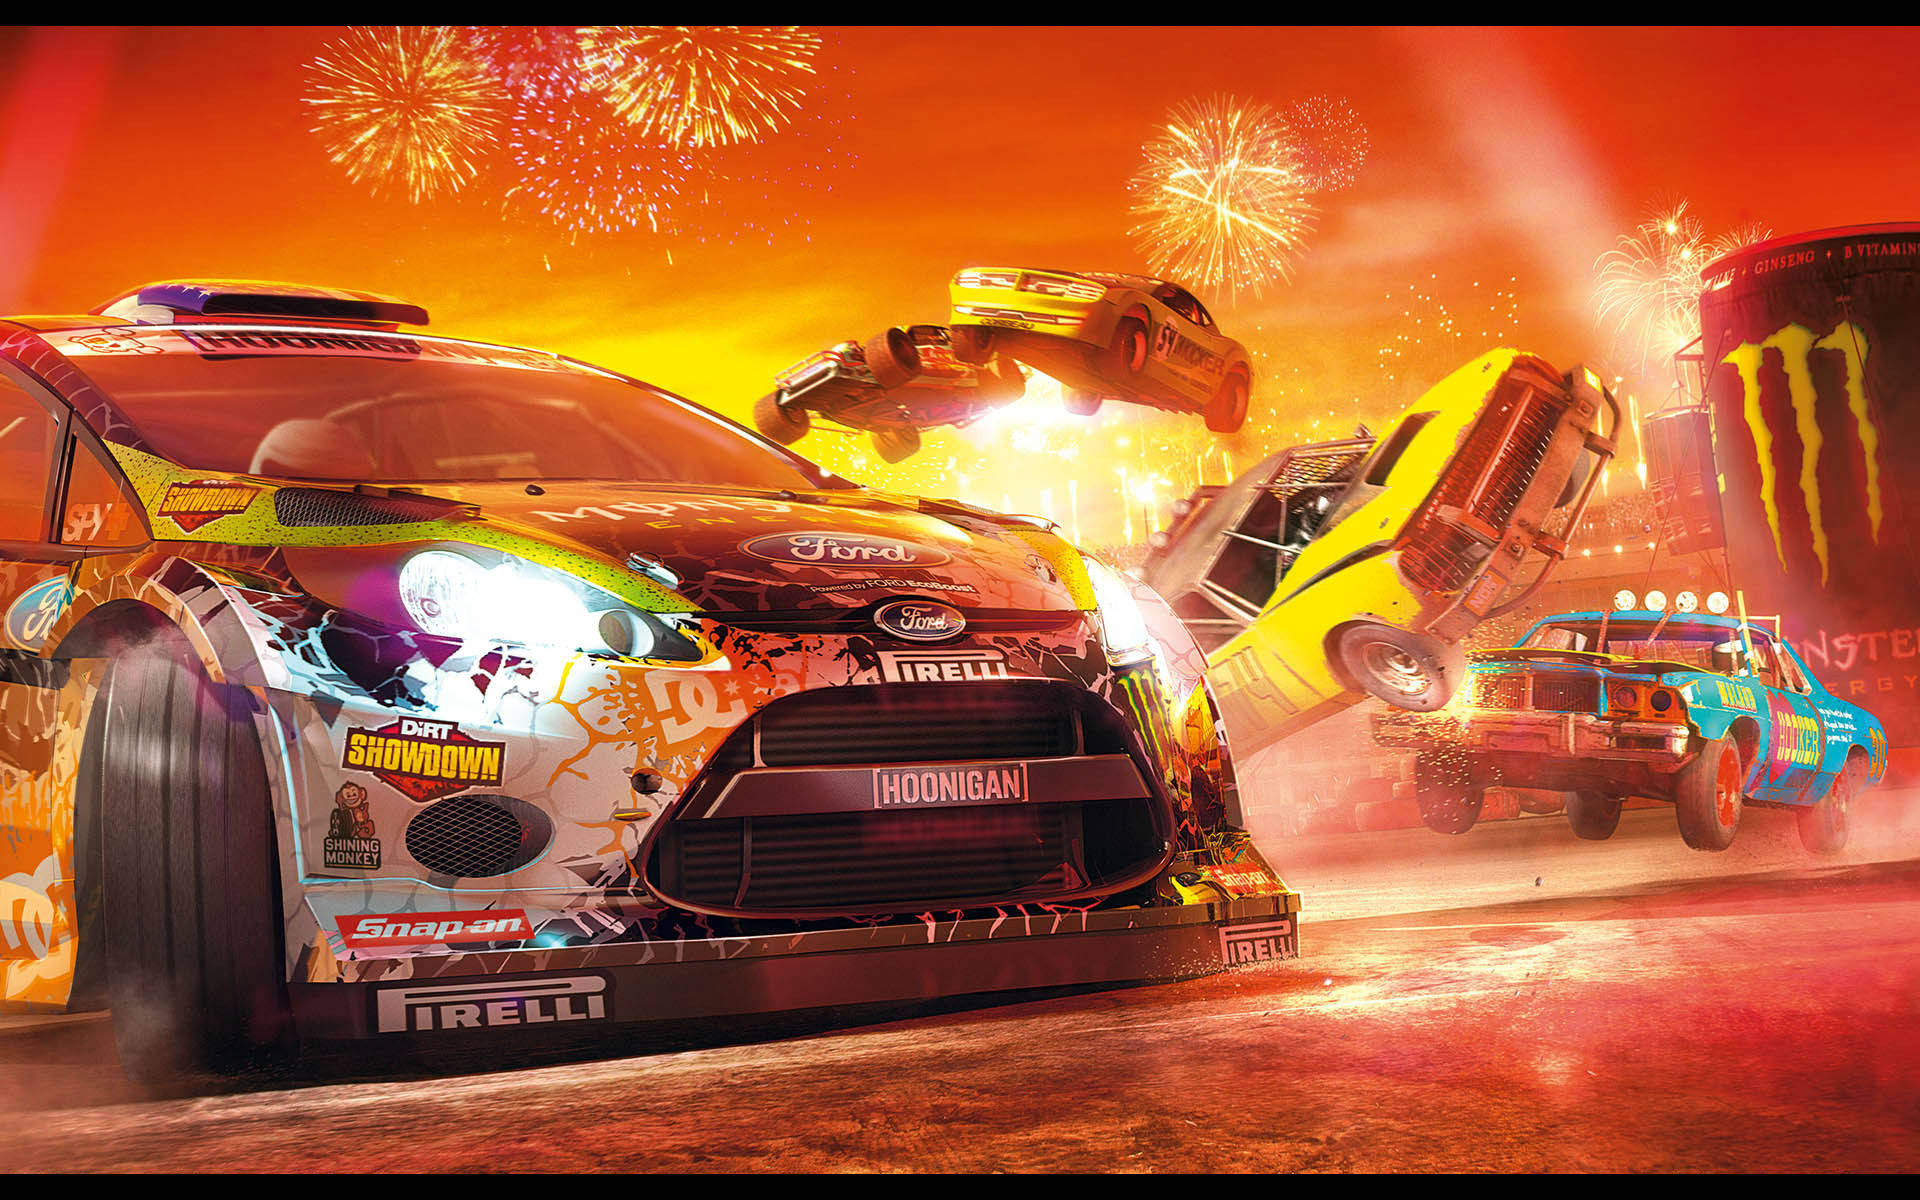 Thrilling Race In Dirt Showdown Background